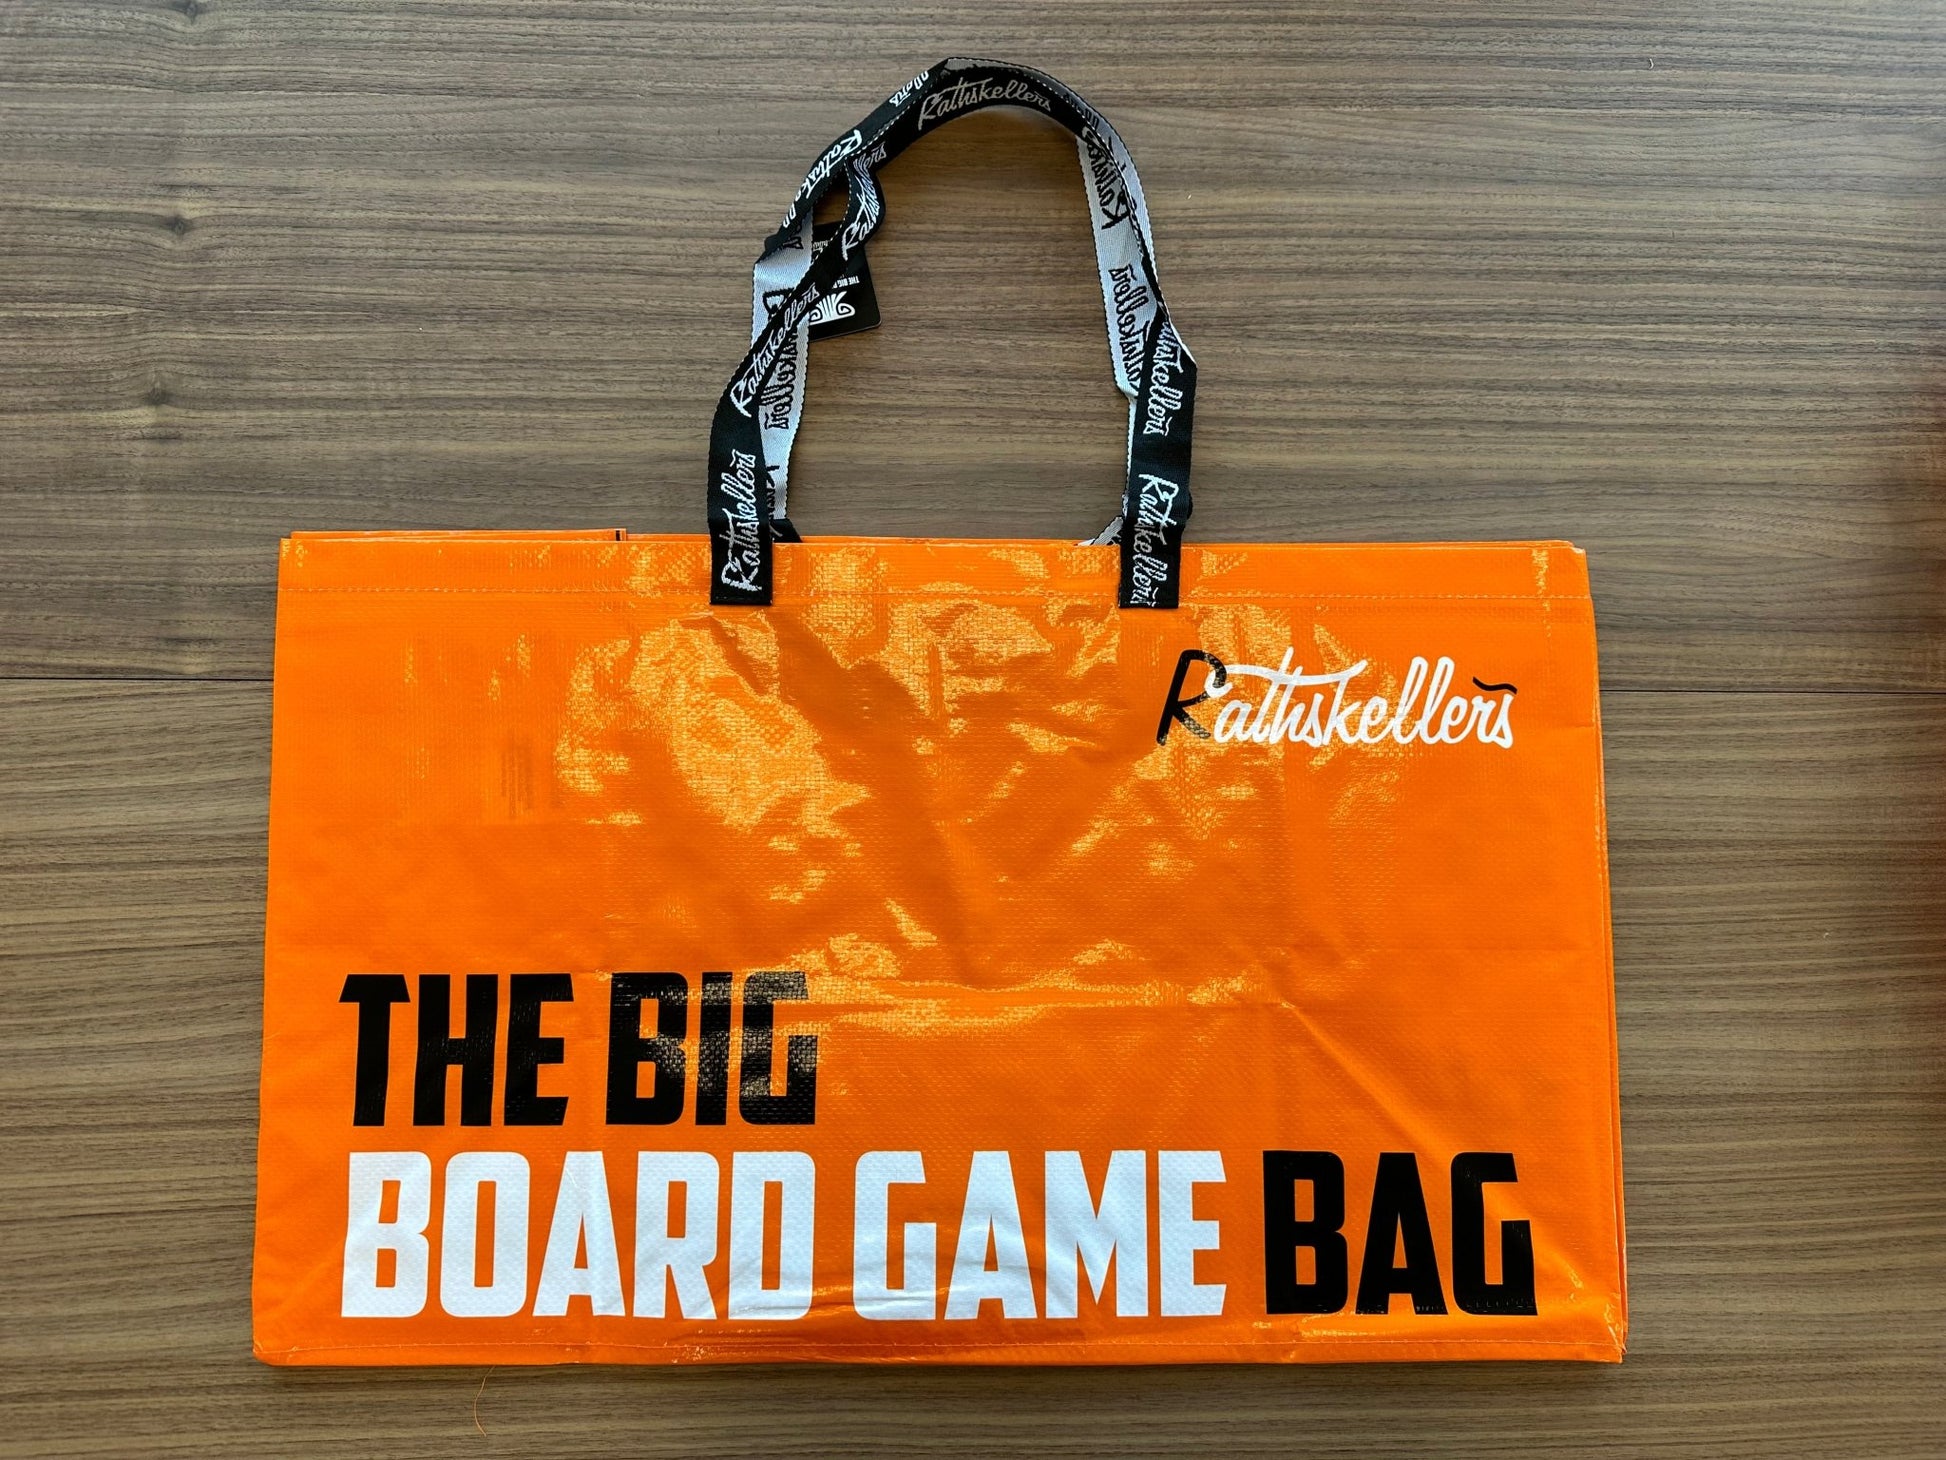 Rathskellers The Big Board Game Bag